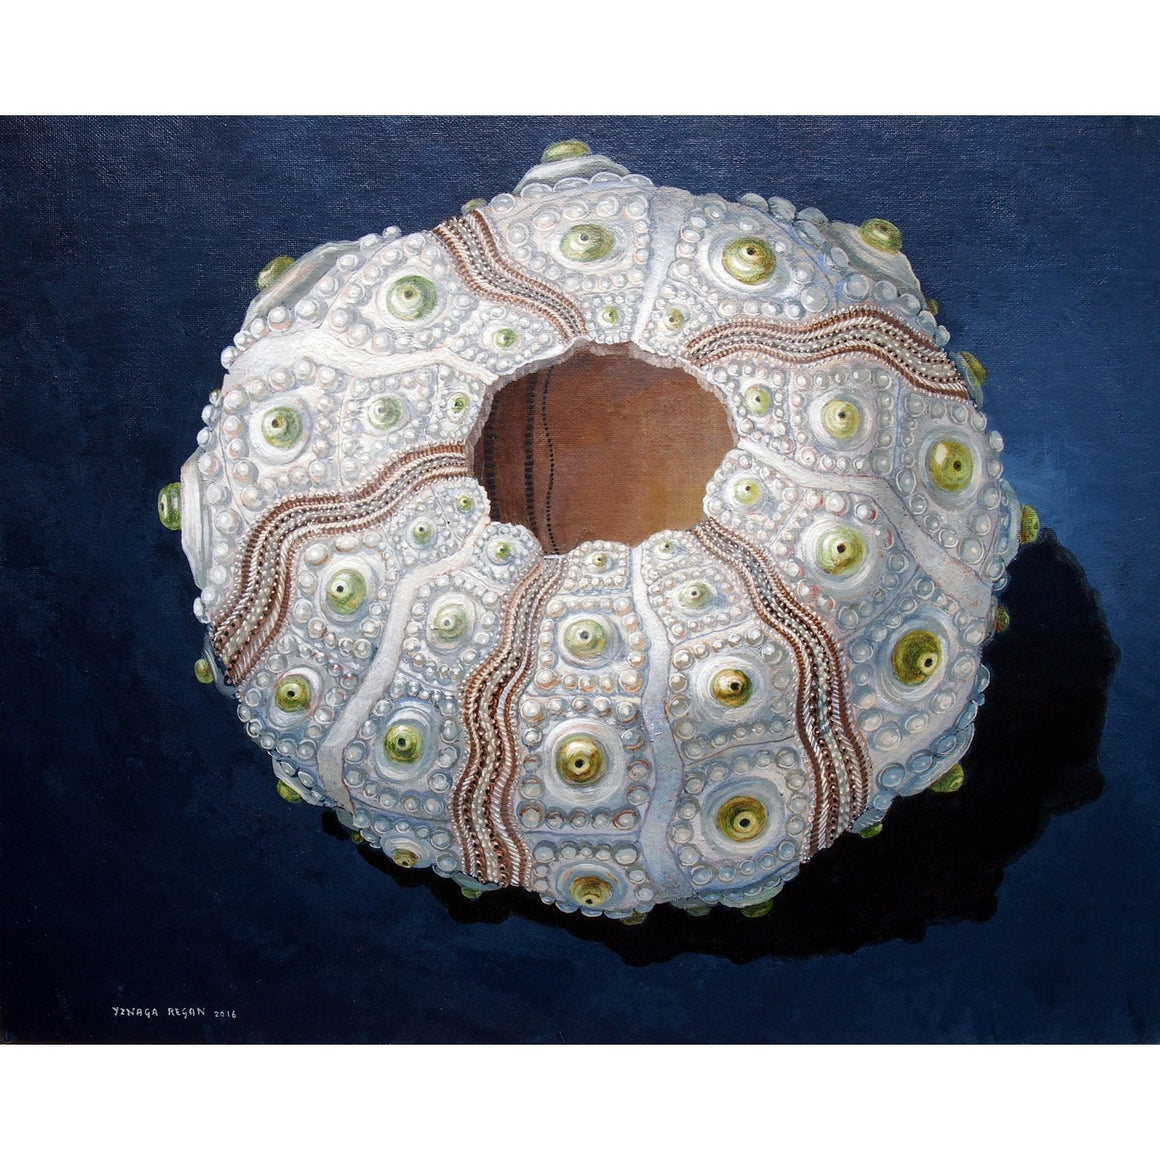 'Sea Urchin #64 - White Jewel' Limited Edition